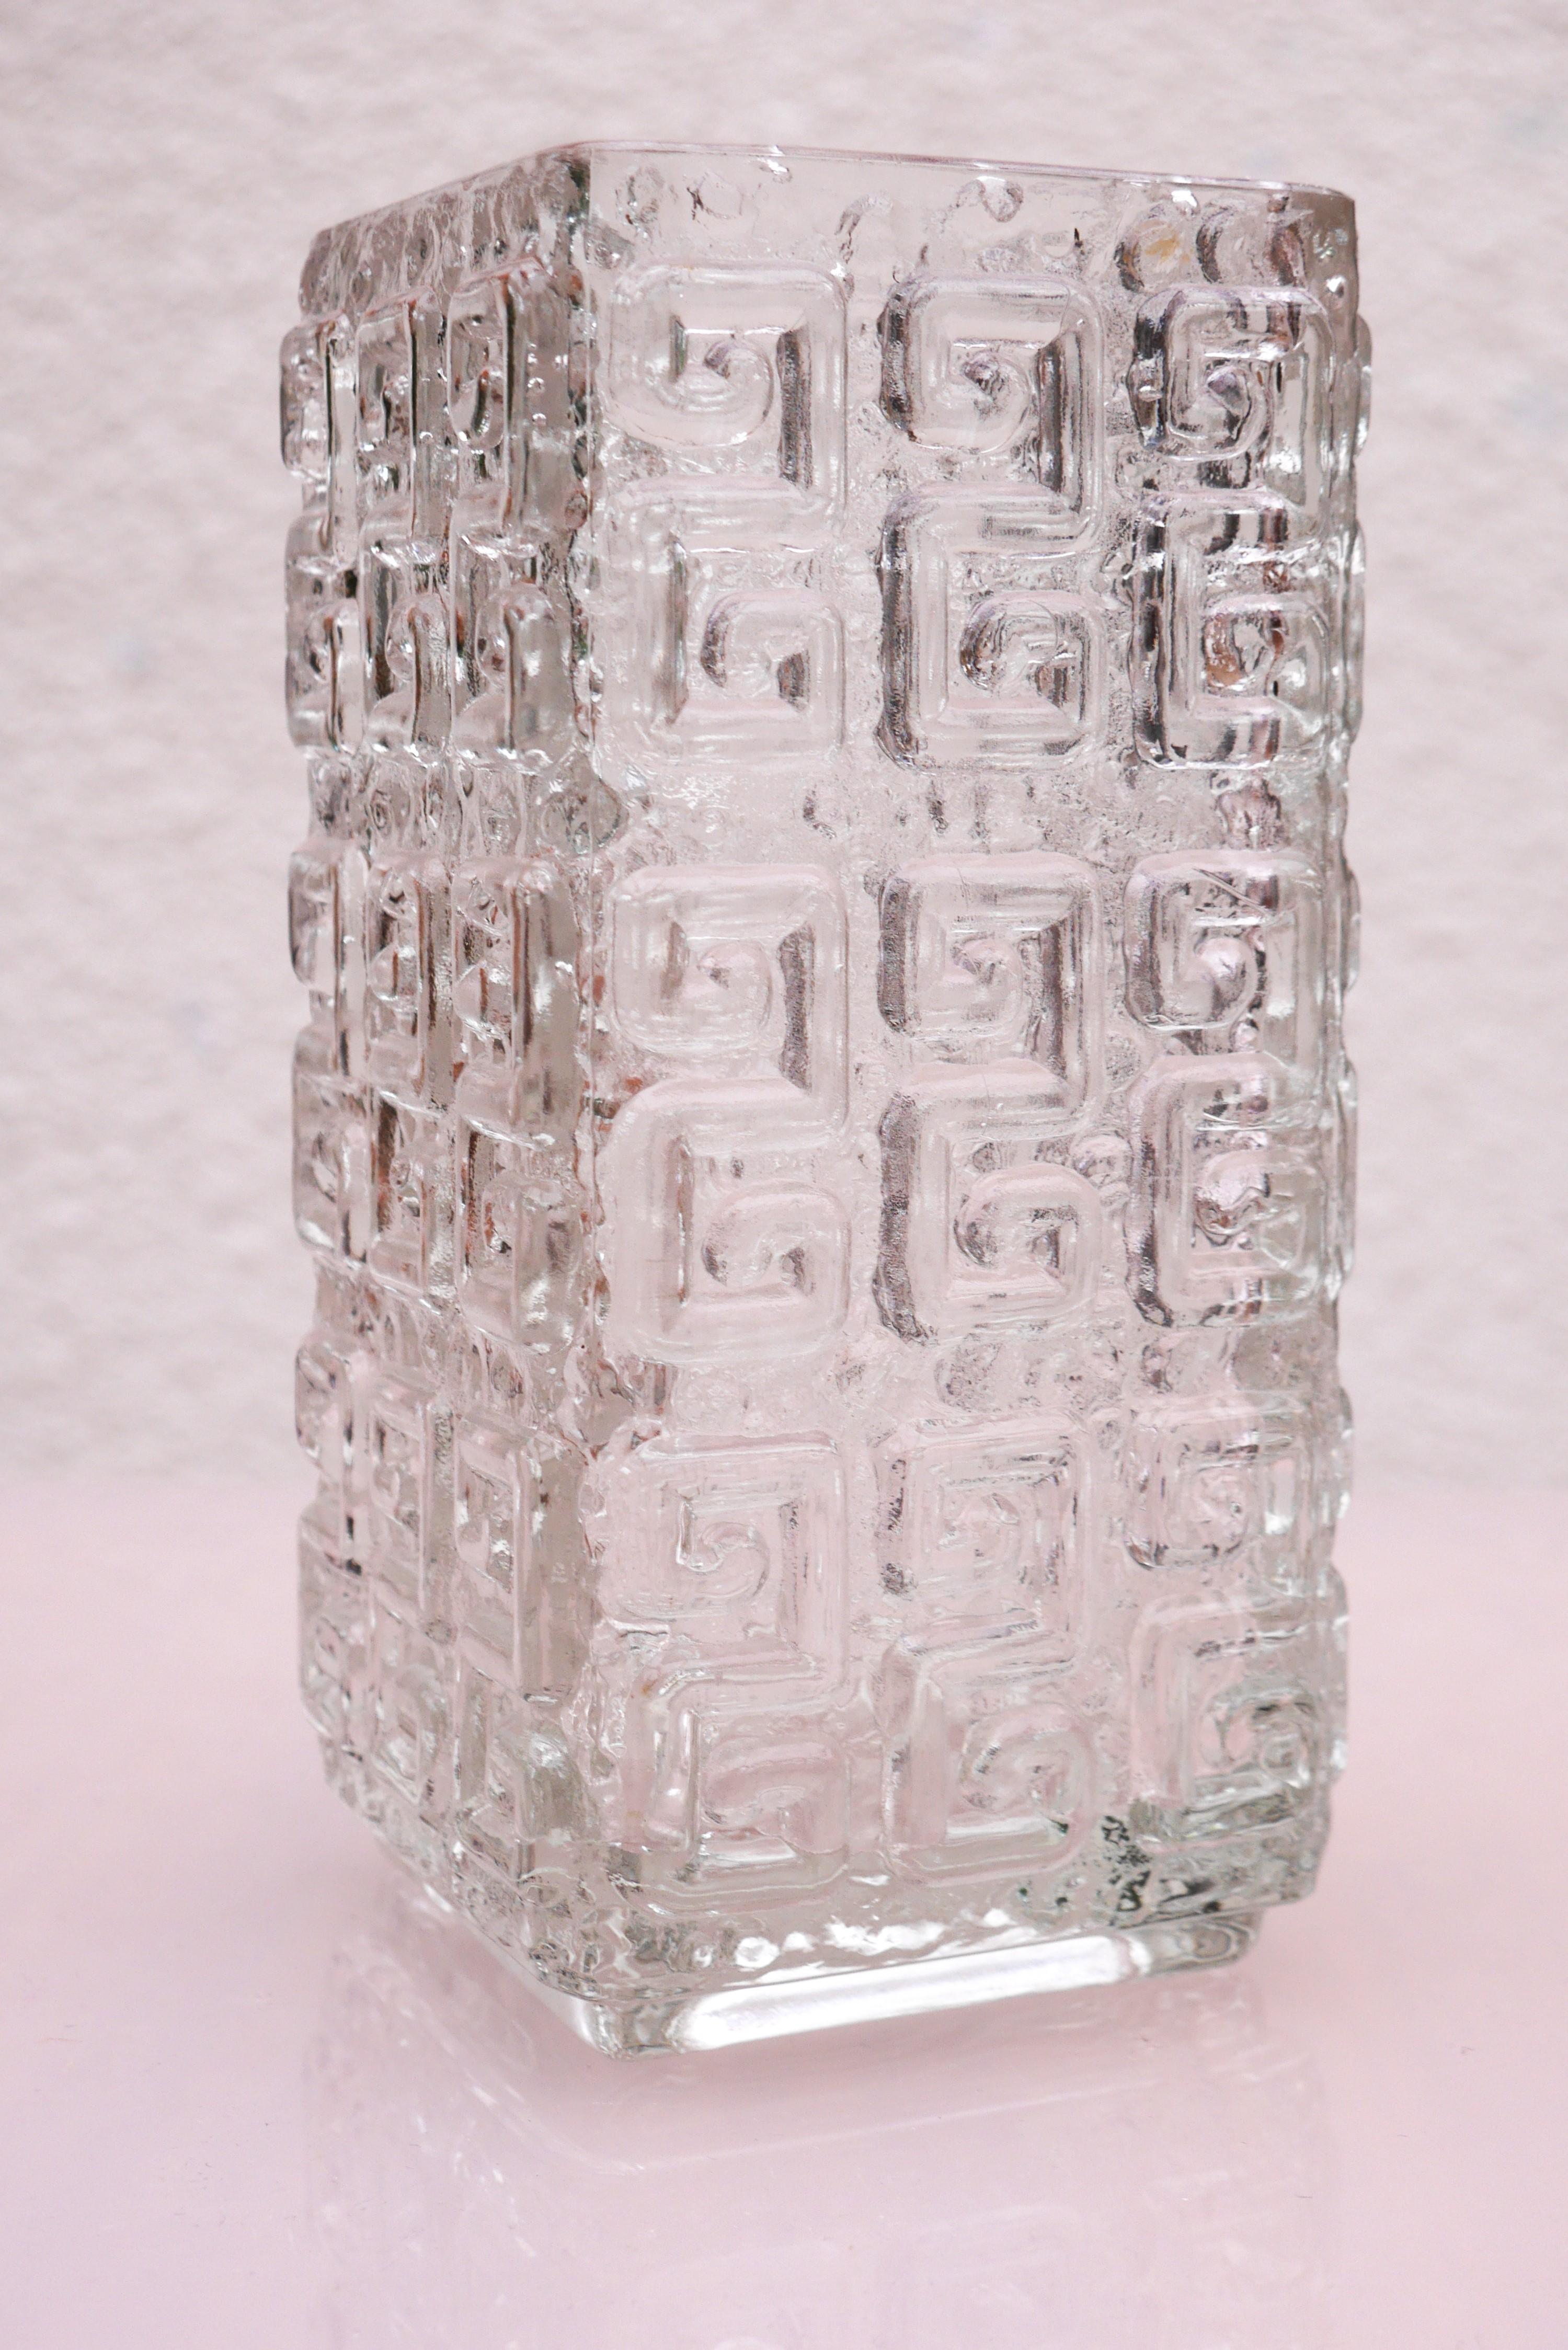 An amazing Finnish crystal vase by Riihimäen lasi made by Tamara Aladin known as ”Taalari